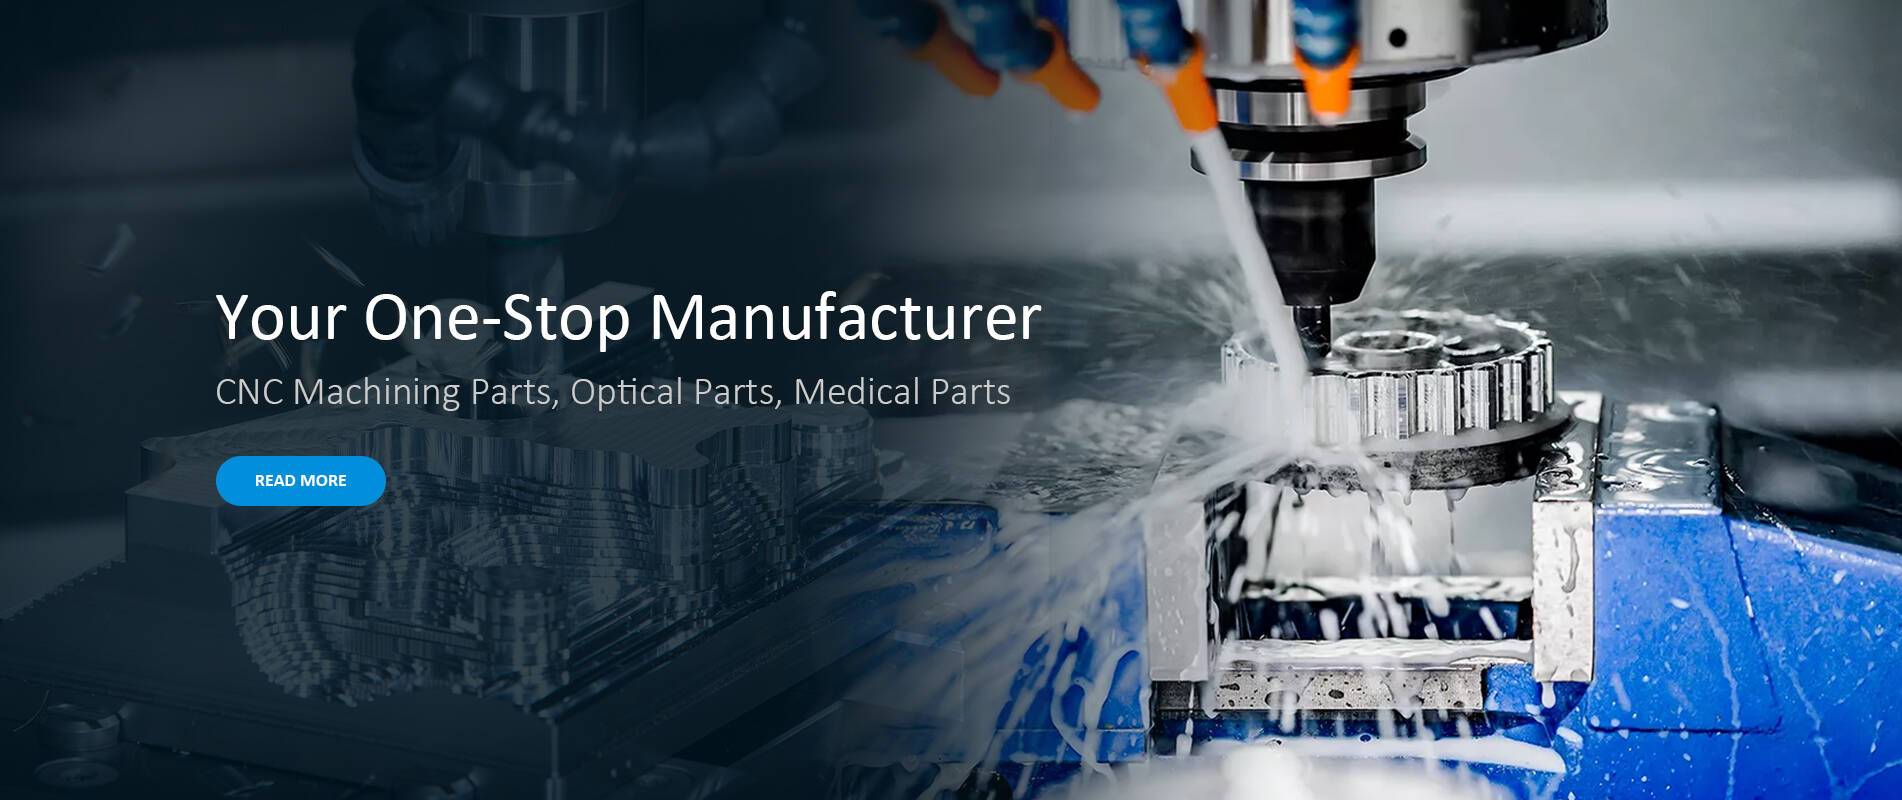 CNC Machining Parts, Optical Parts, Medical Parts